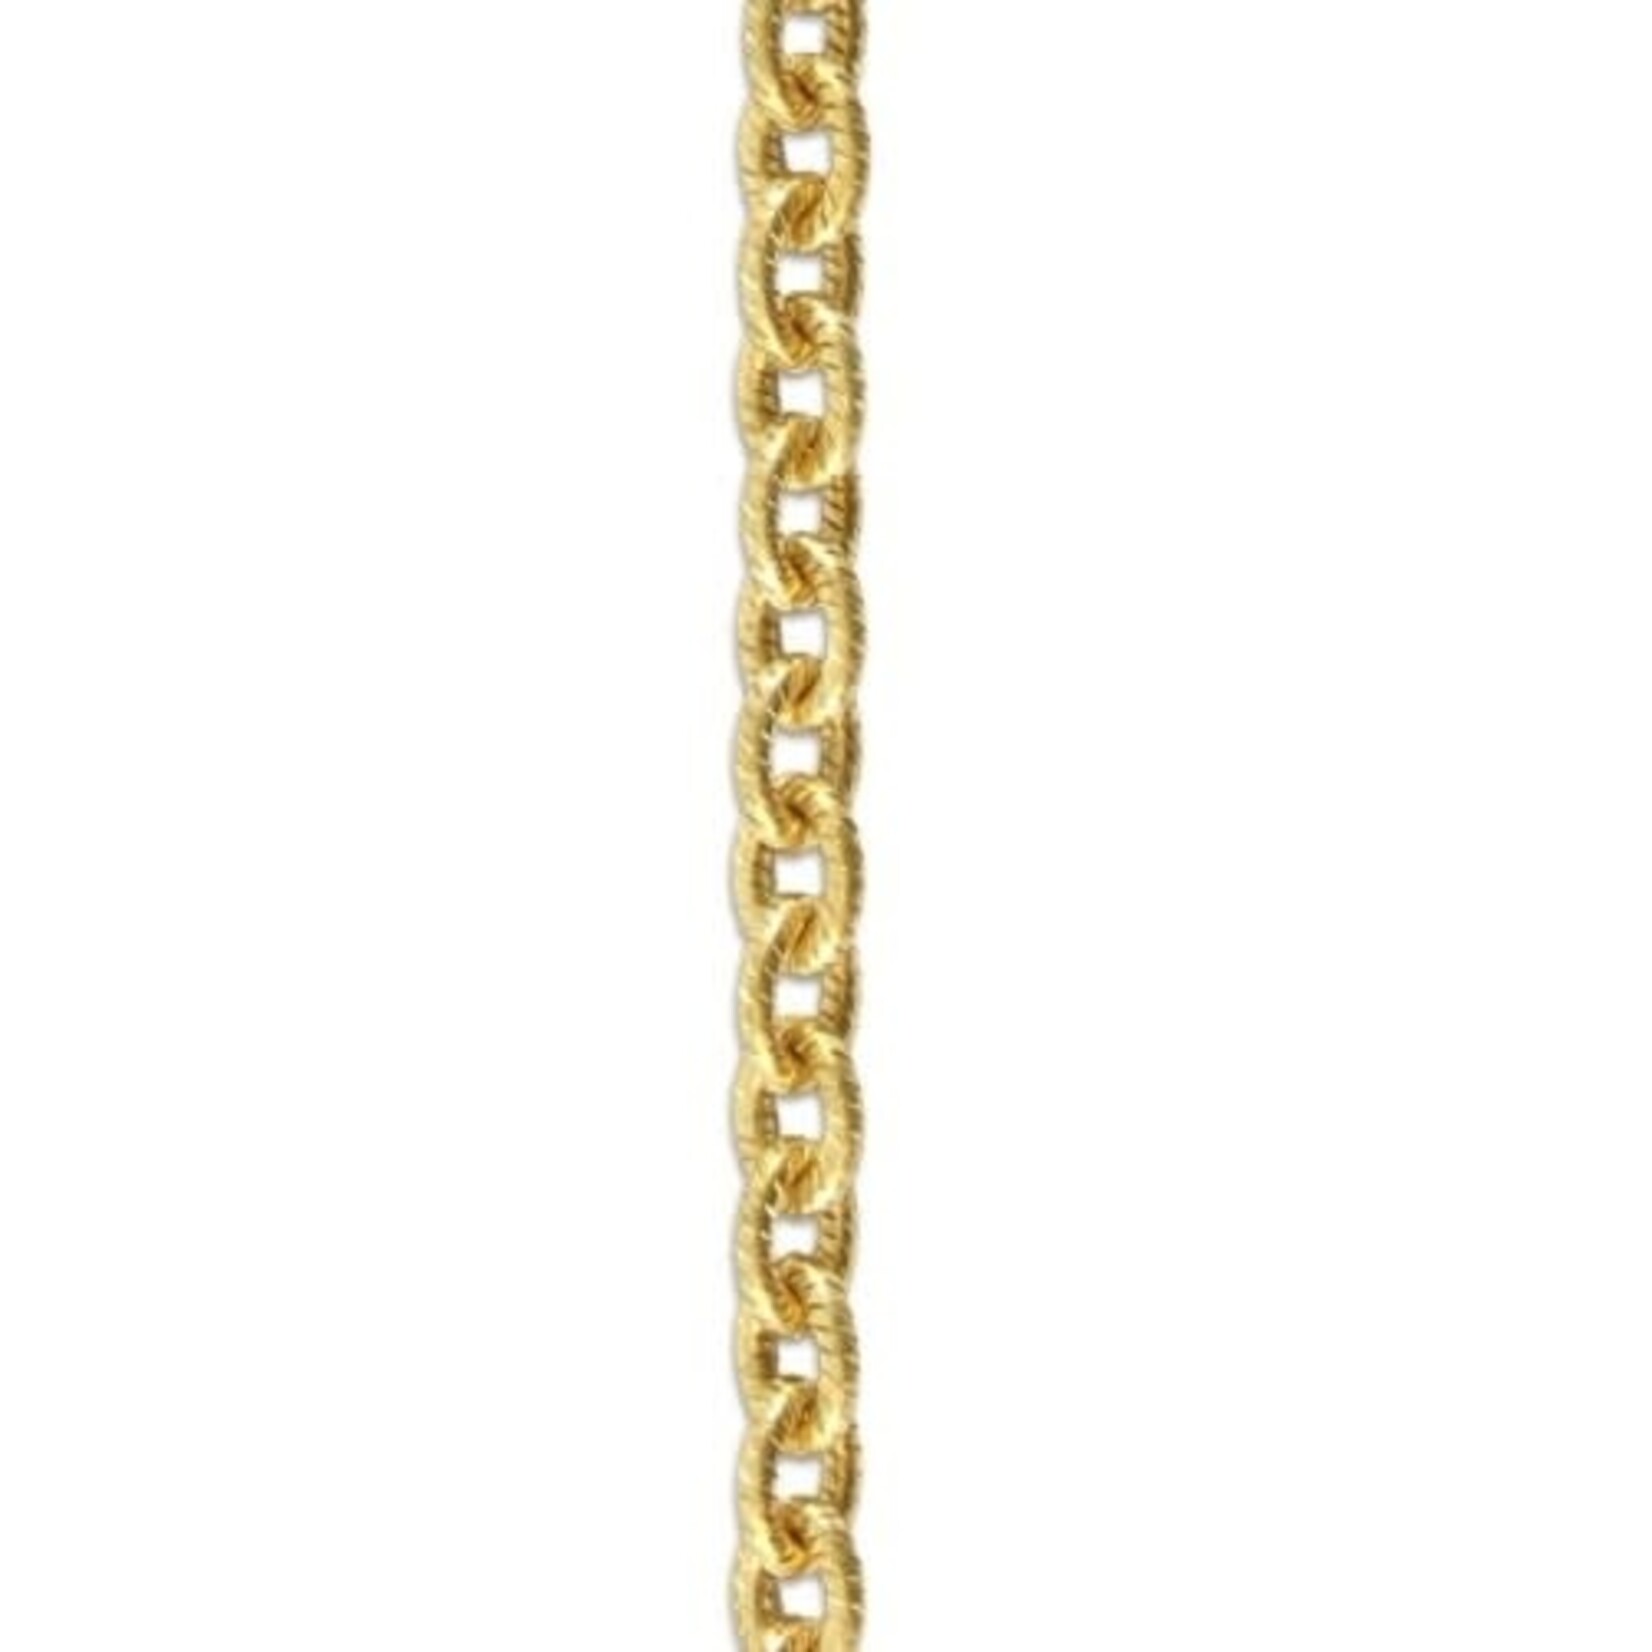 Vintaj Vintaj Vogue Brass Petite Etched Cable Chain CHV35